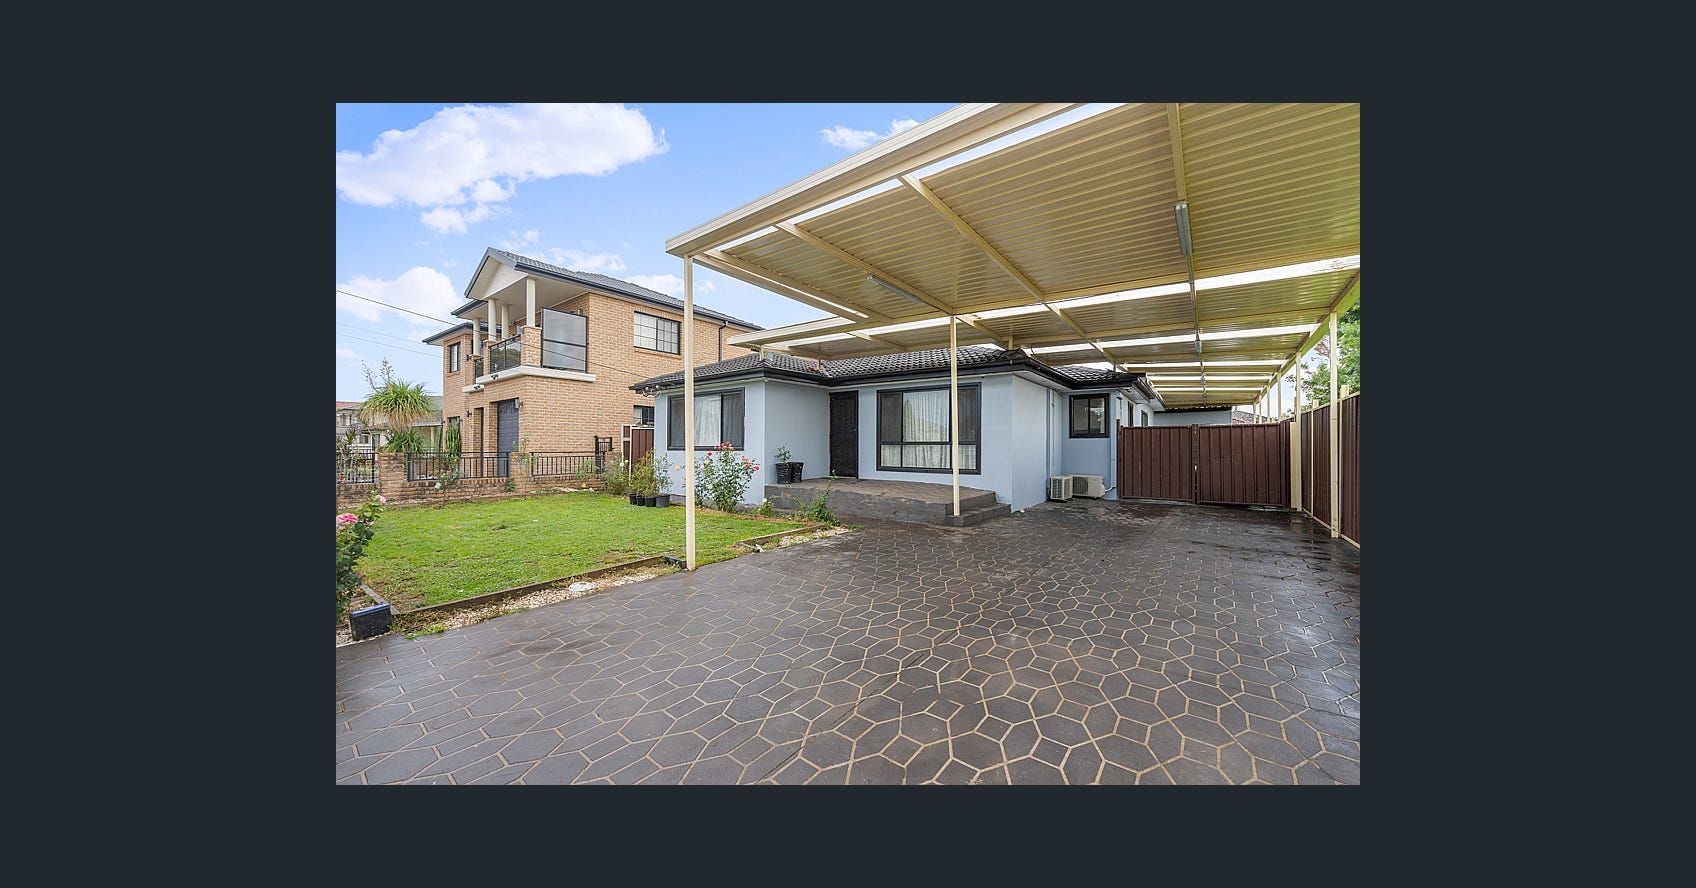 5 bedrooms House in 16 Wildman Avenue LIVERPOOL NSW, 2170